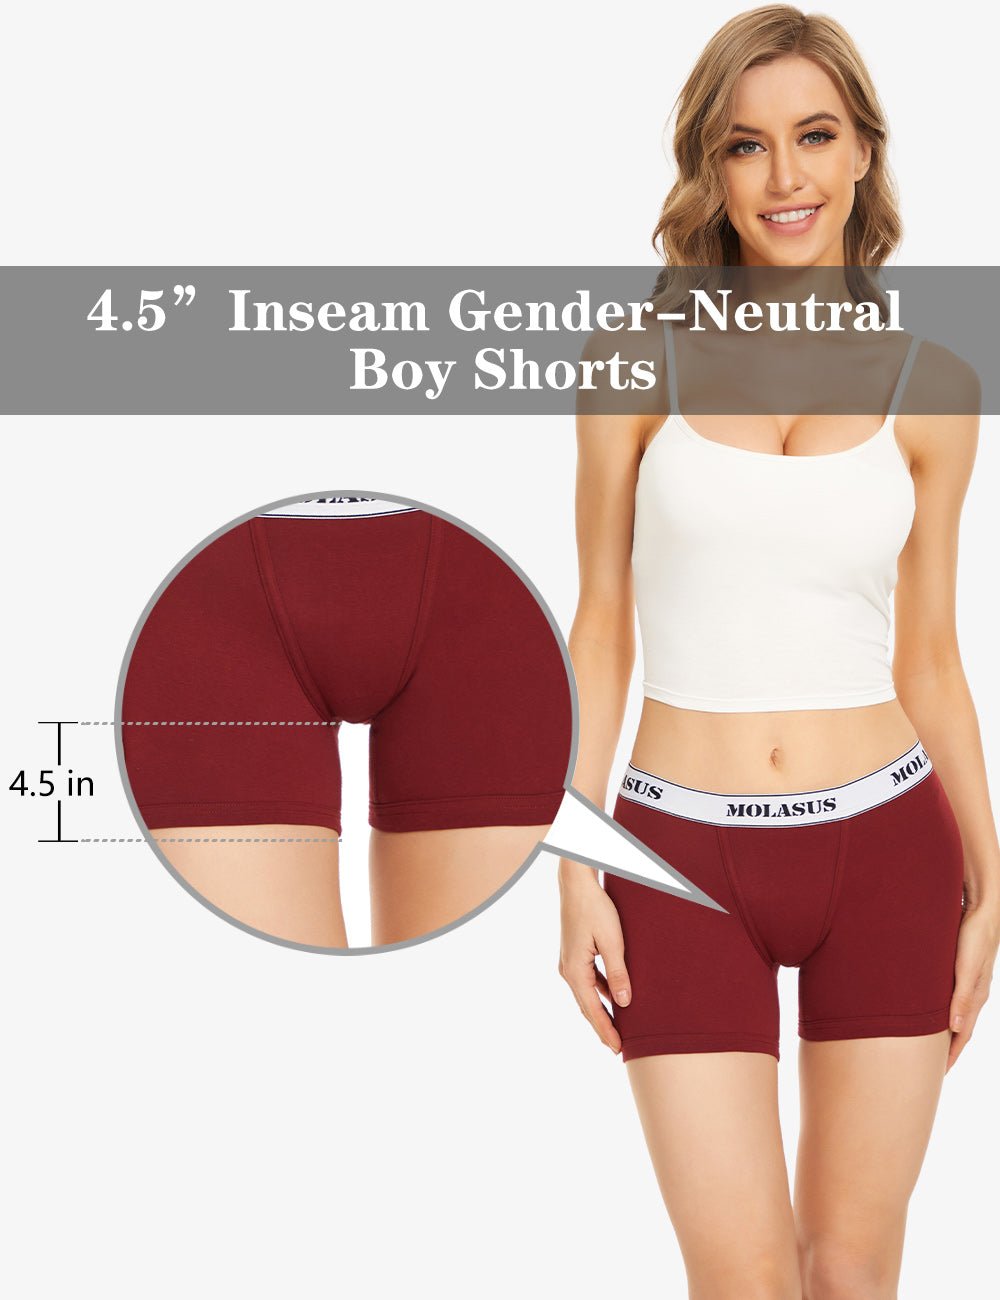 Women's Underwear 3 Pack Elastic Soft Comfortable Cotton Boy Shorts Panties  for Girls